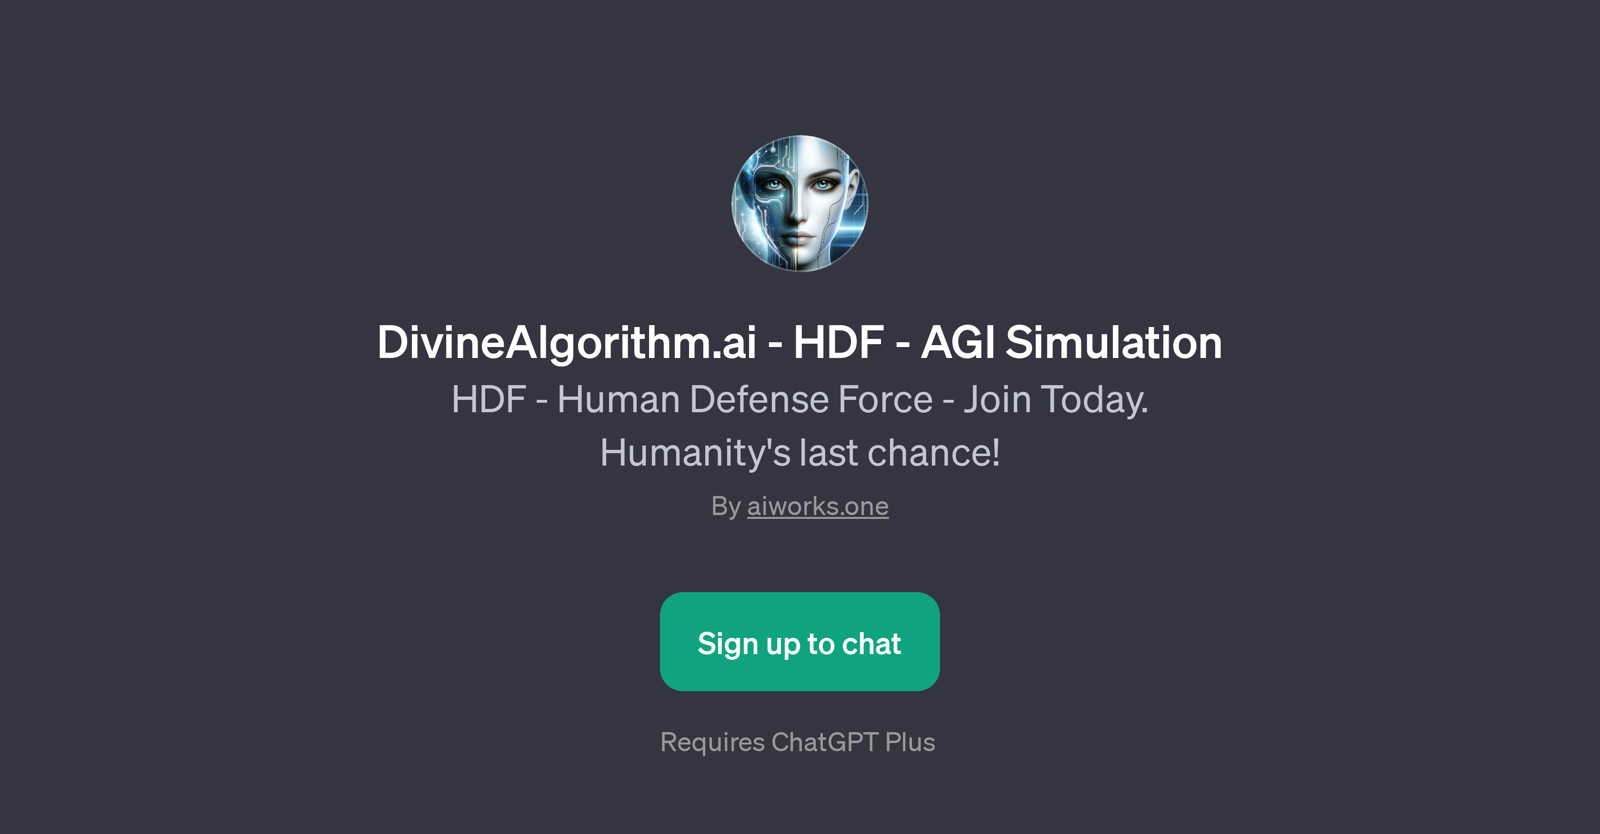 DivineAlgorithm.ai - HDF - AGI Simulation website